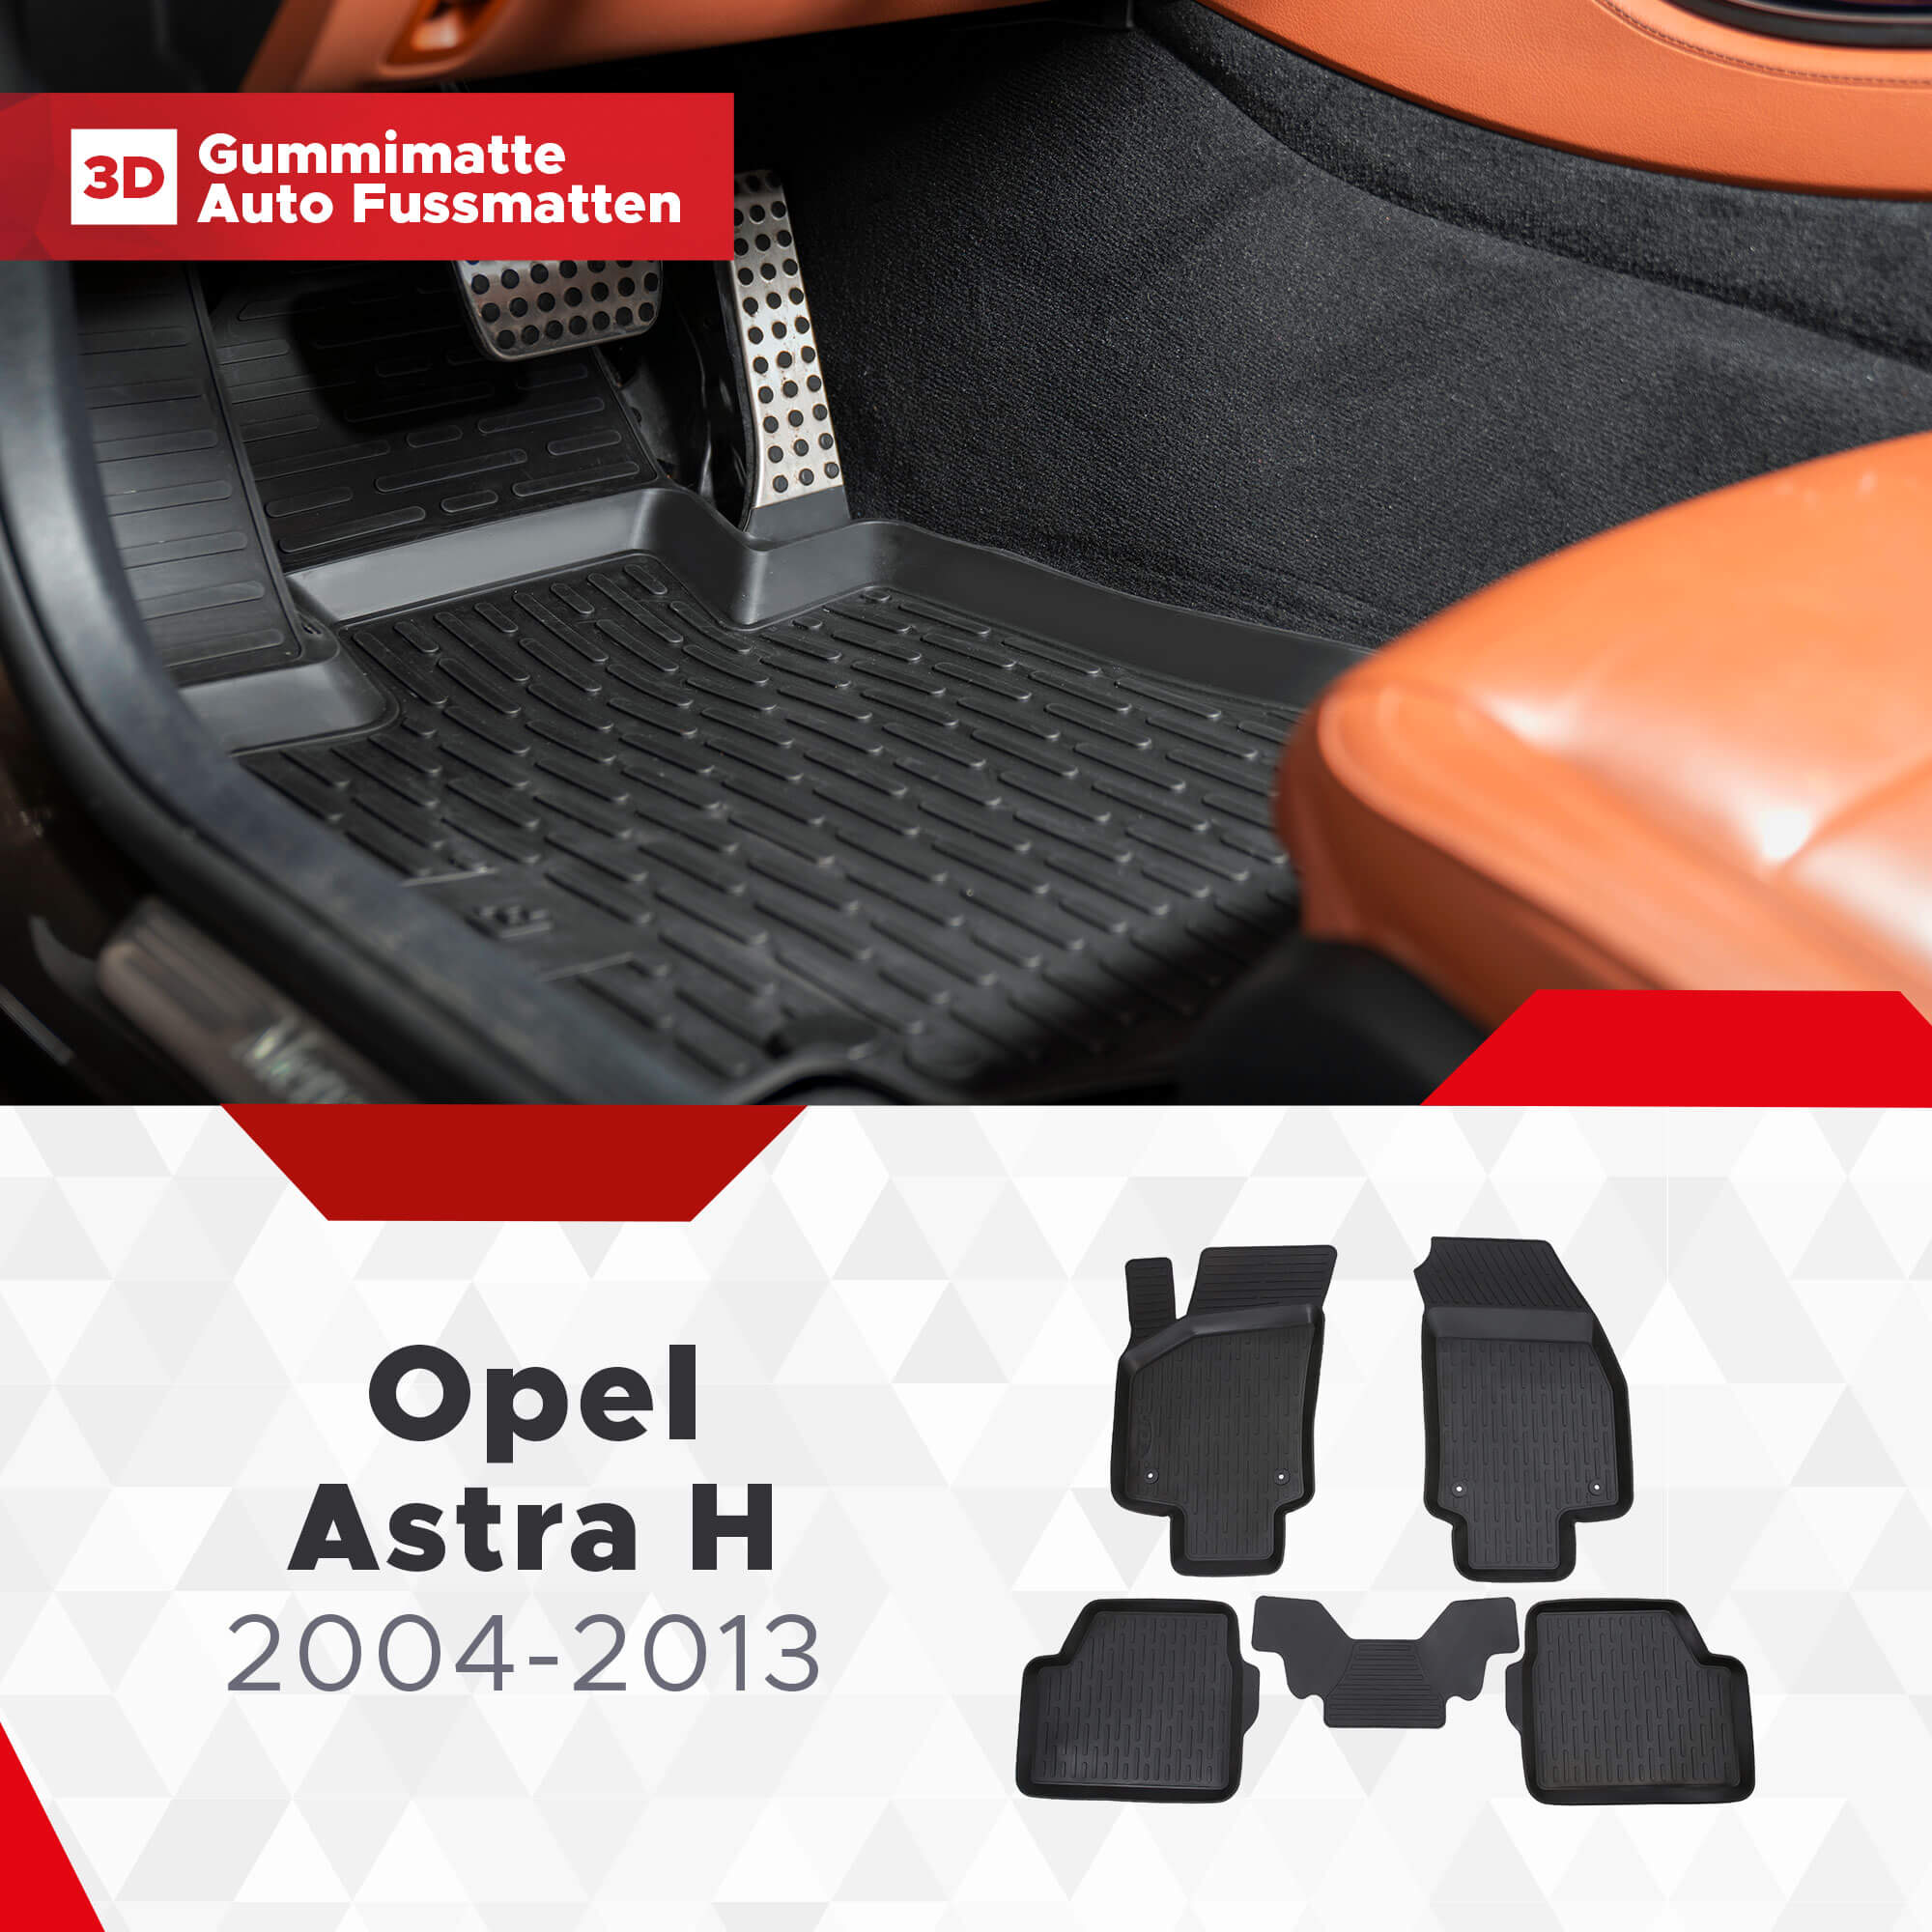 3D Fussmatten passend für Opel Astra H 2013 2004 